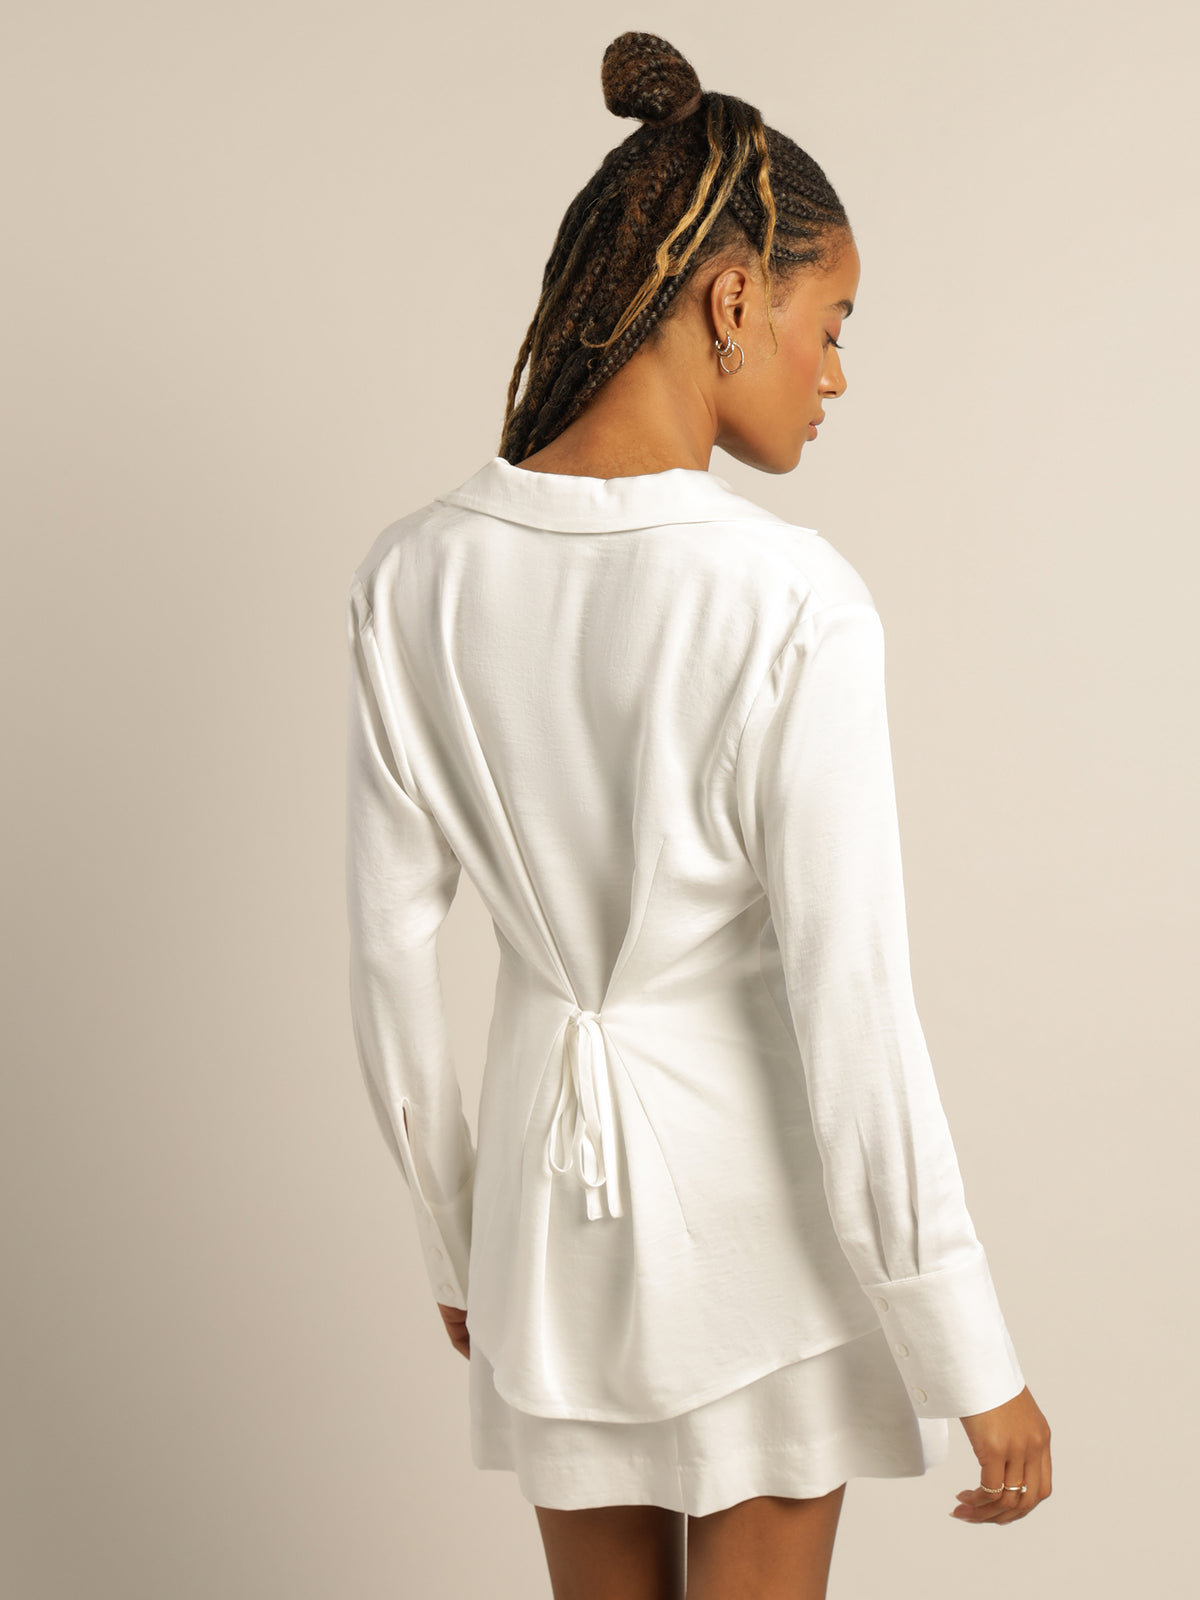 Zaya Shirt in White